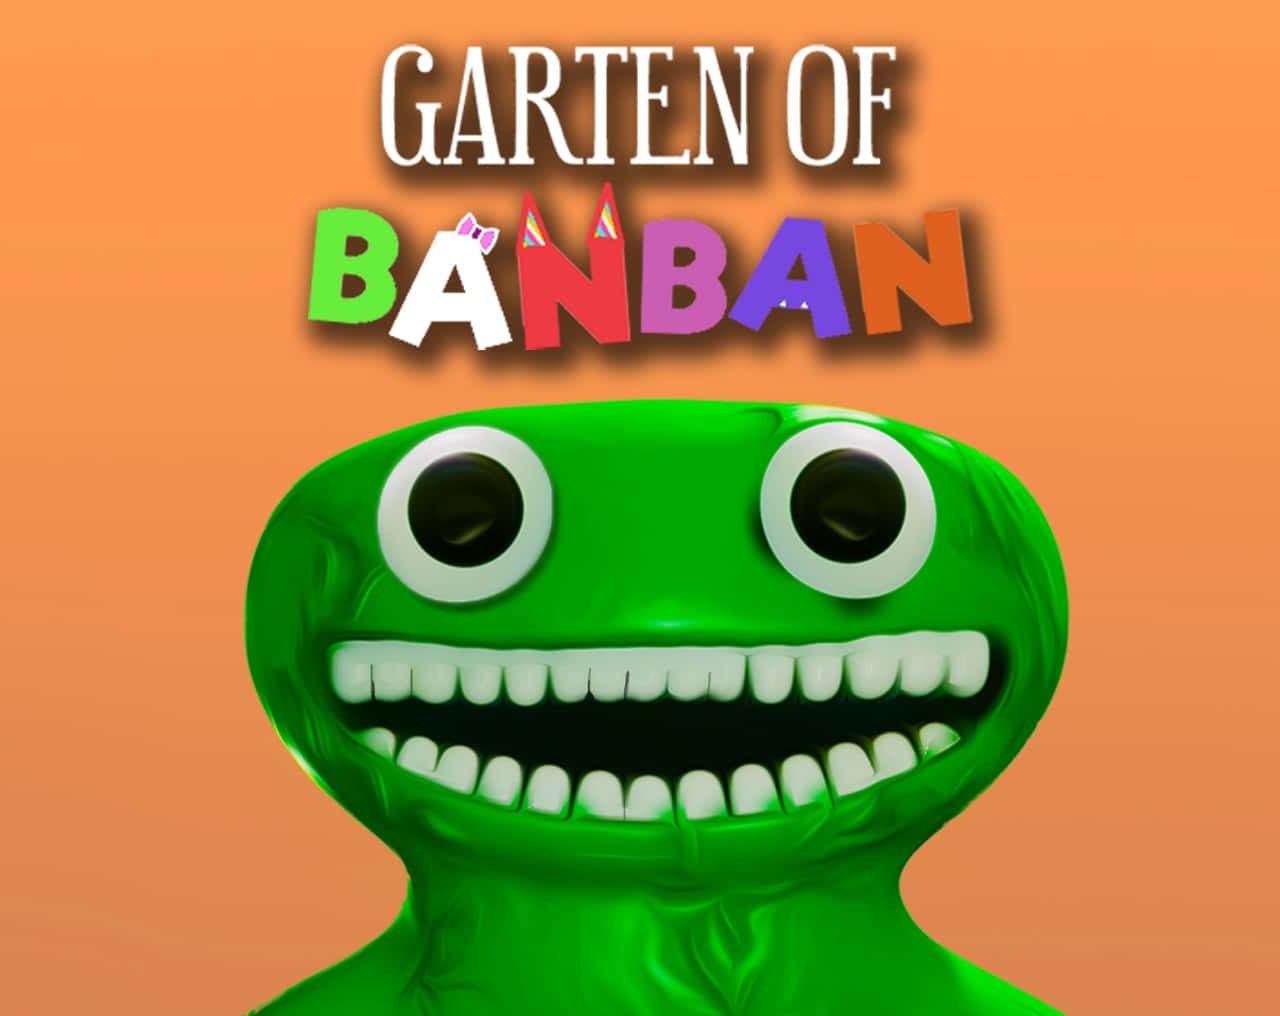 Gartenof Banban Character Promotion Wallpaper